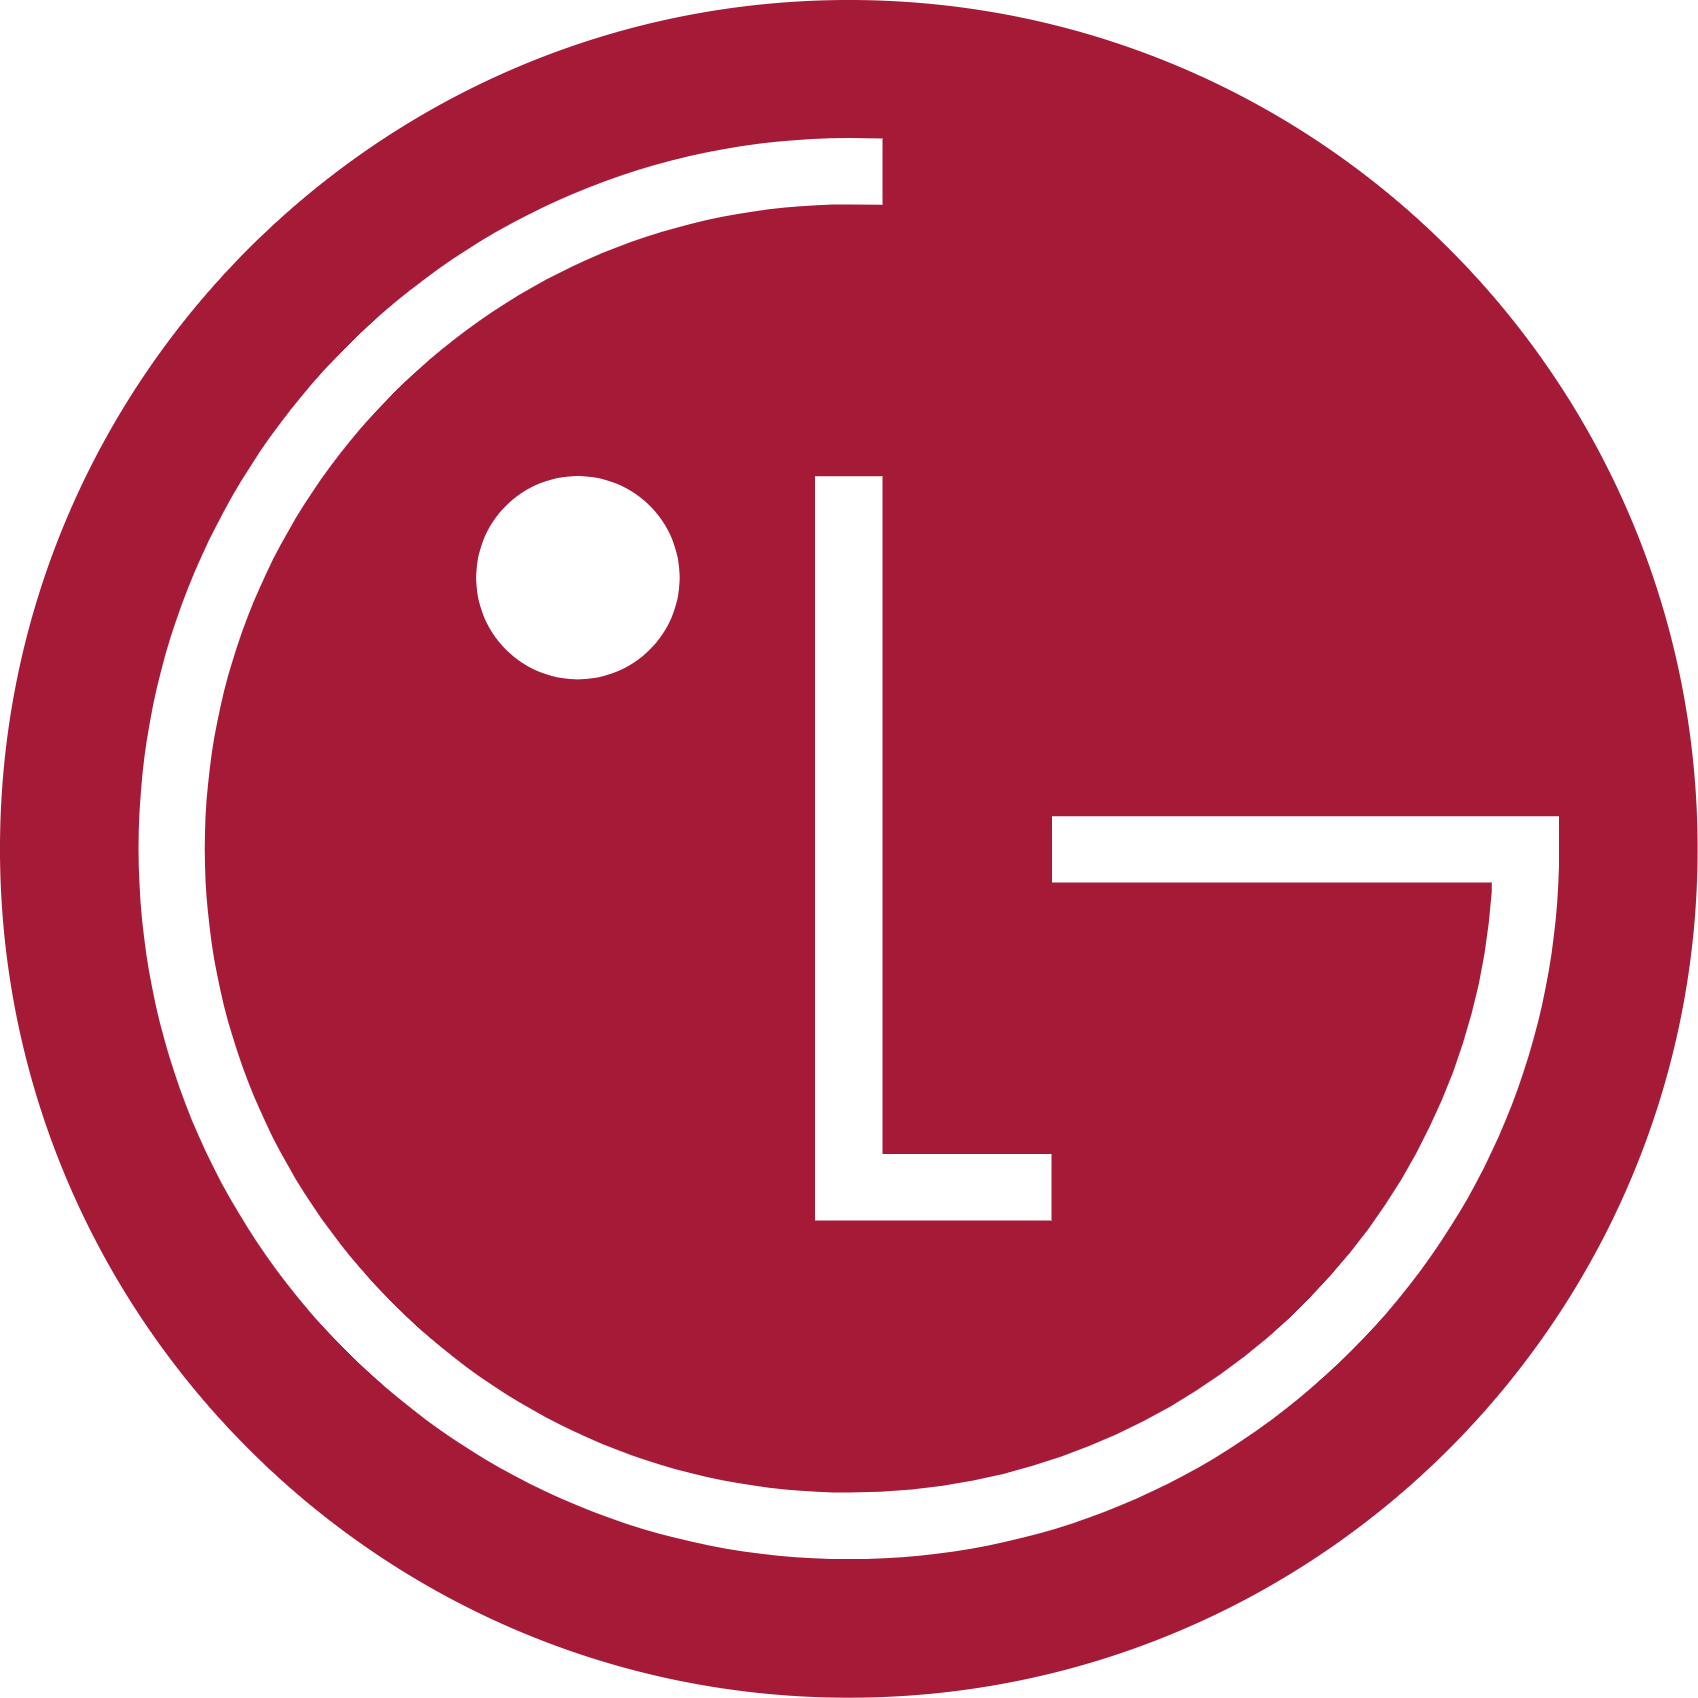 LG Electronics logo in transparent PNG format